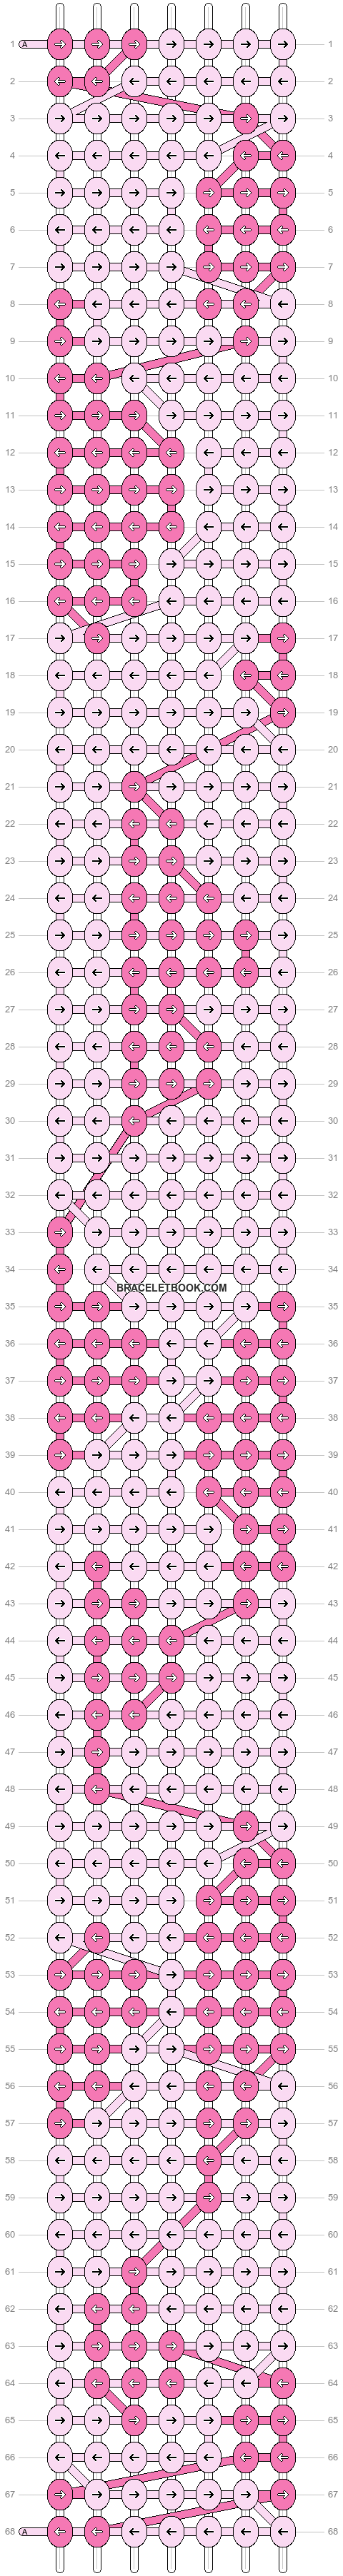 Alpha pattern #1654 variation #52504 pattern